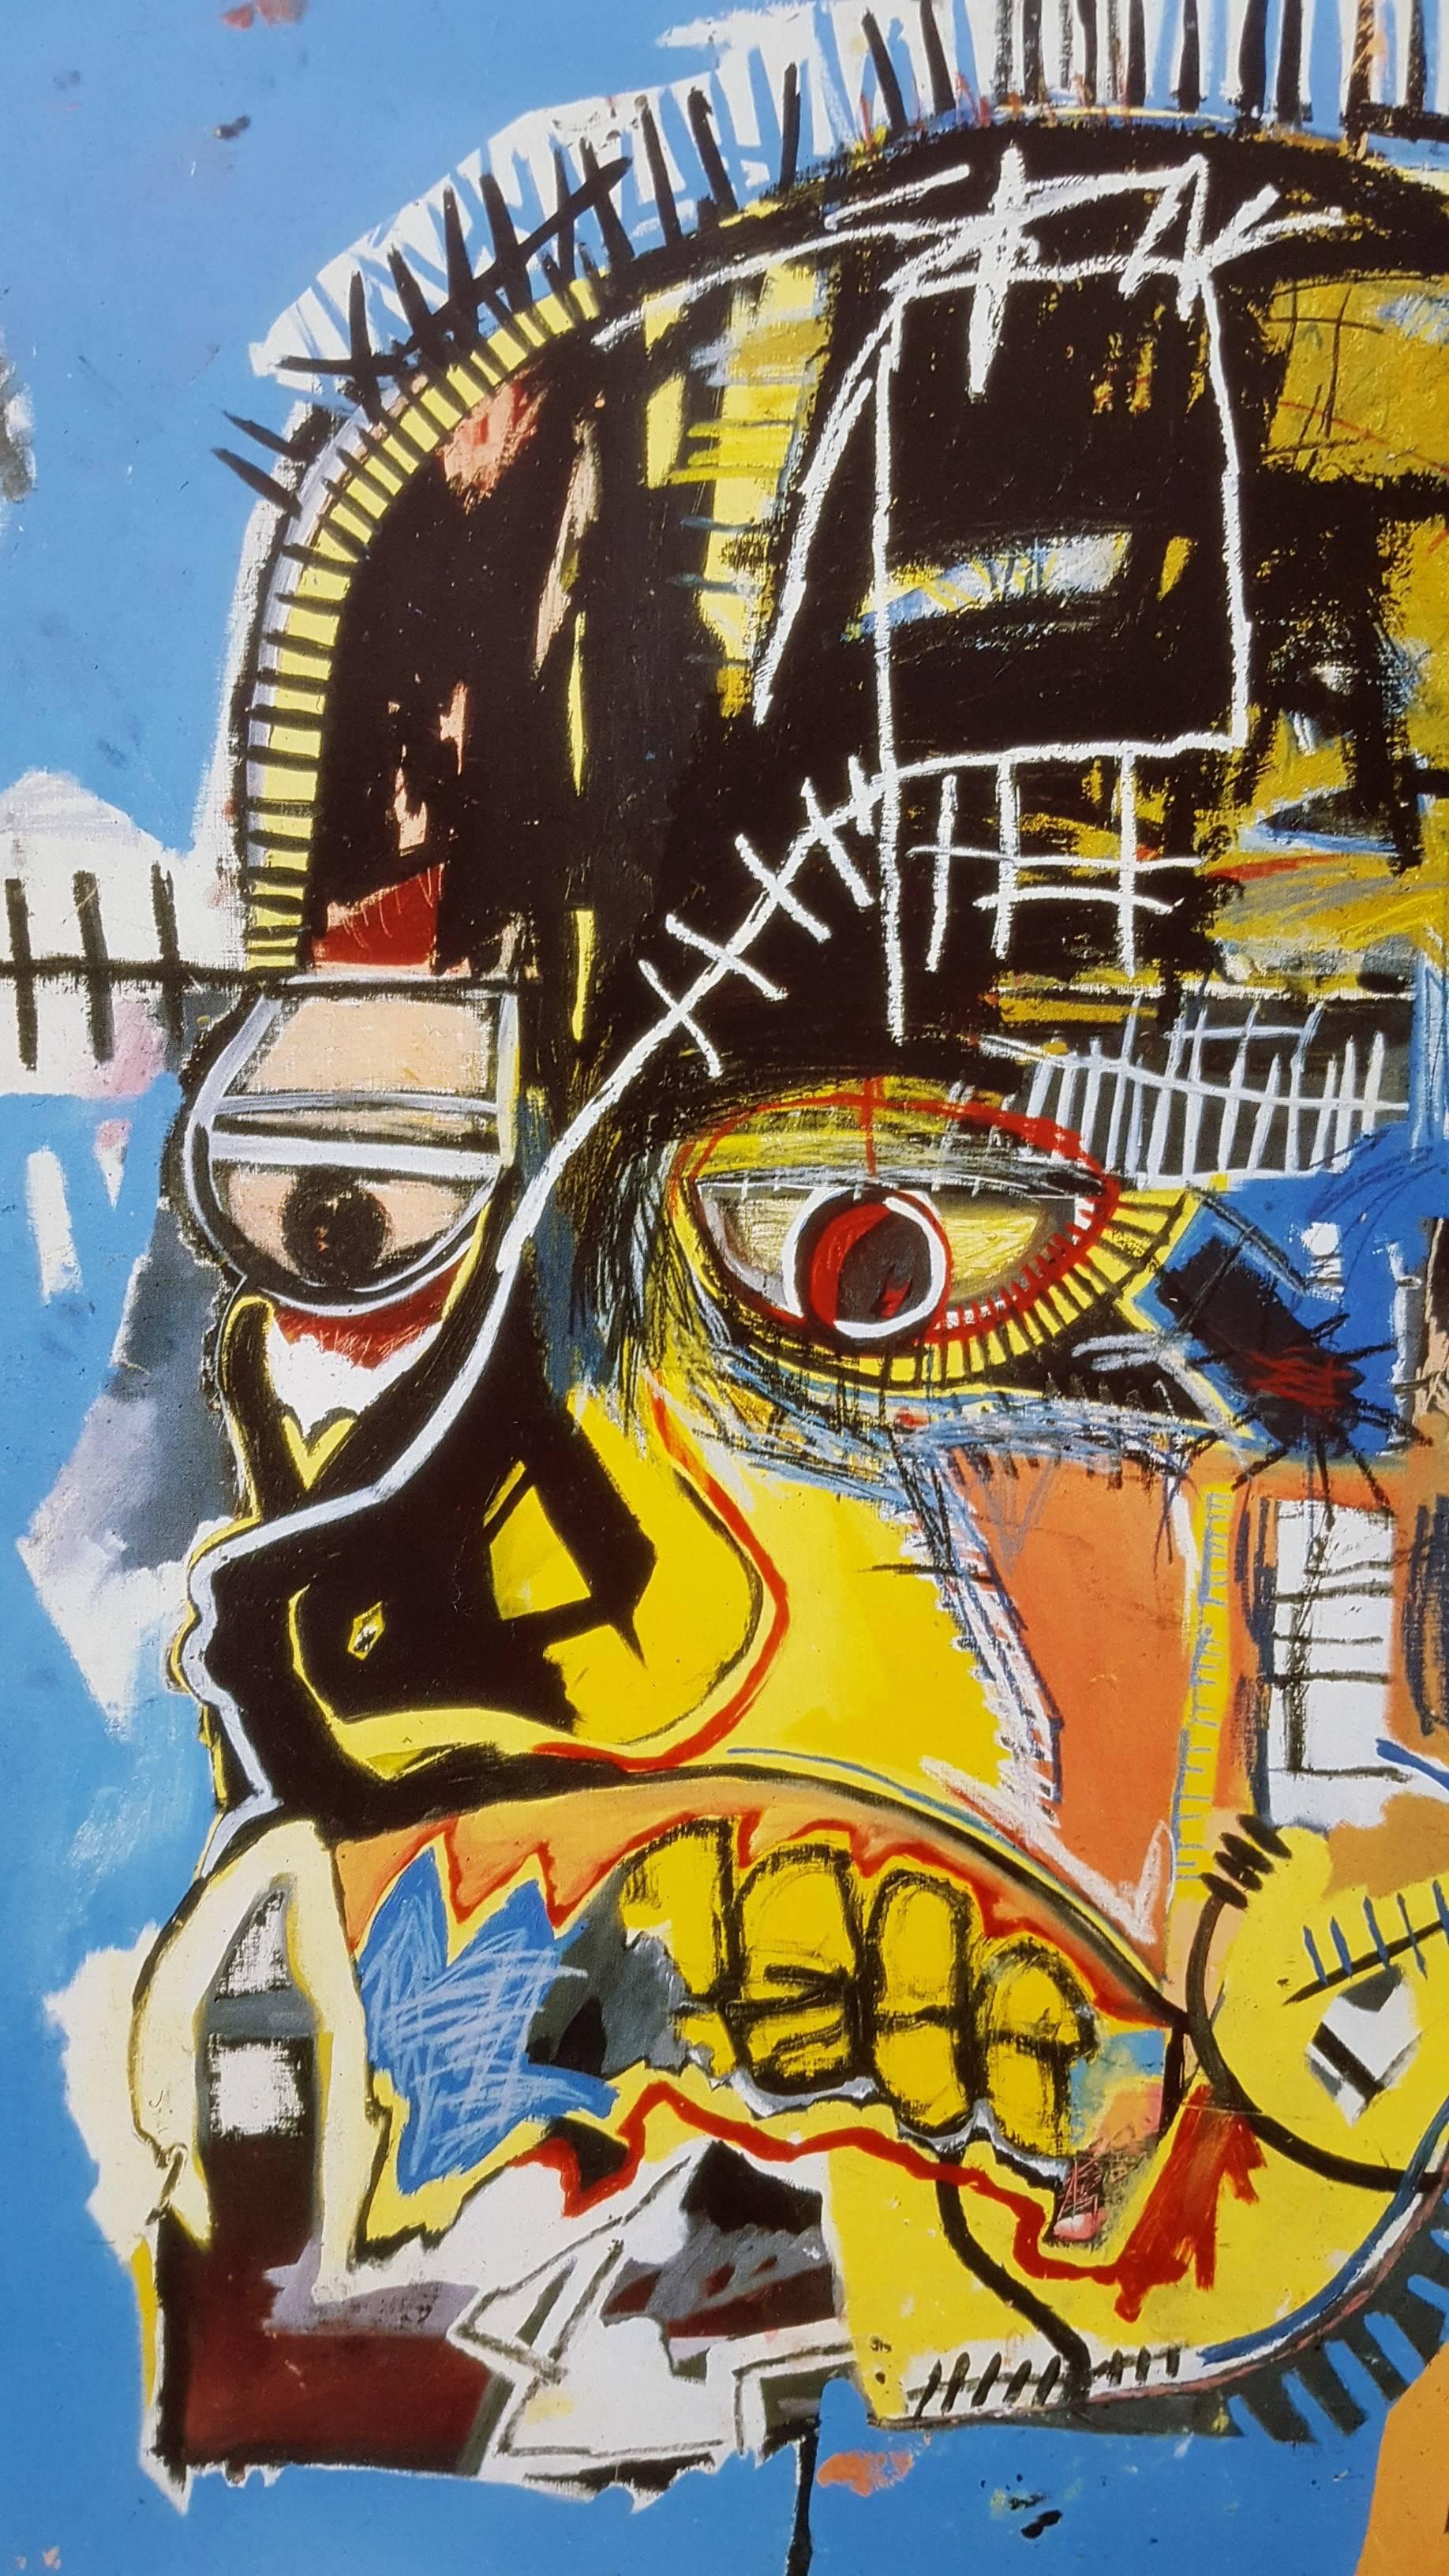 Untitled (Skull) - Pop Art Print by (after) Jean-Michel Basquiat